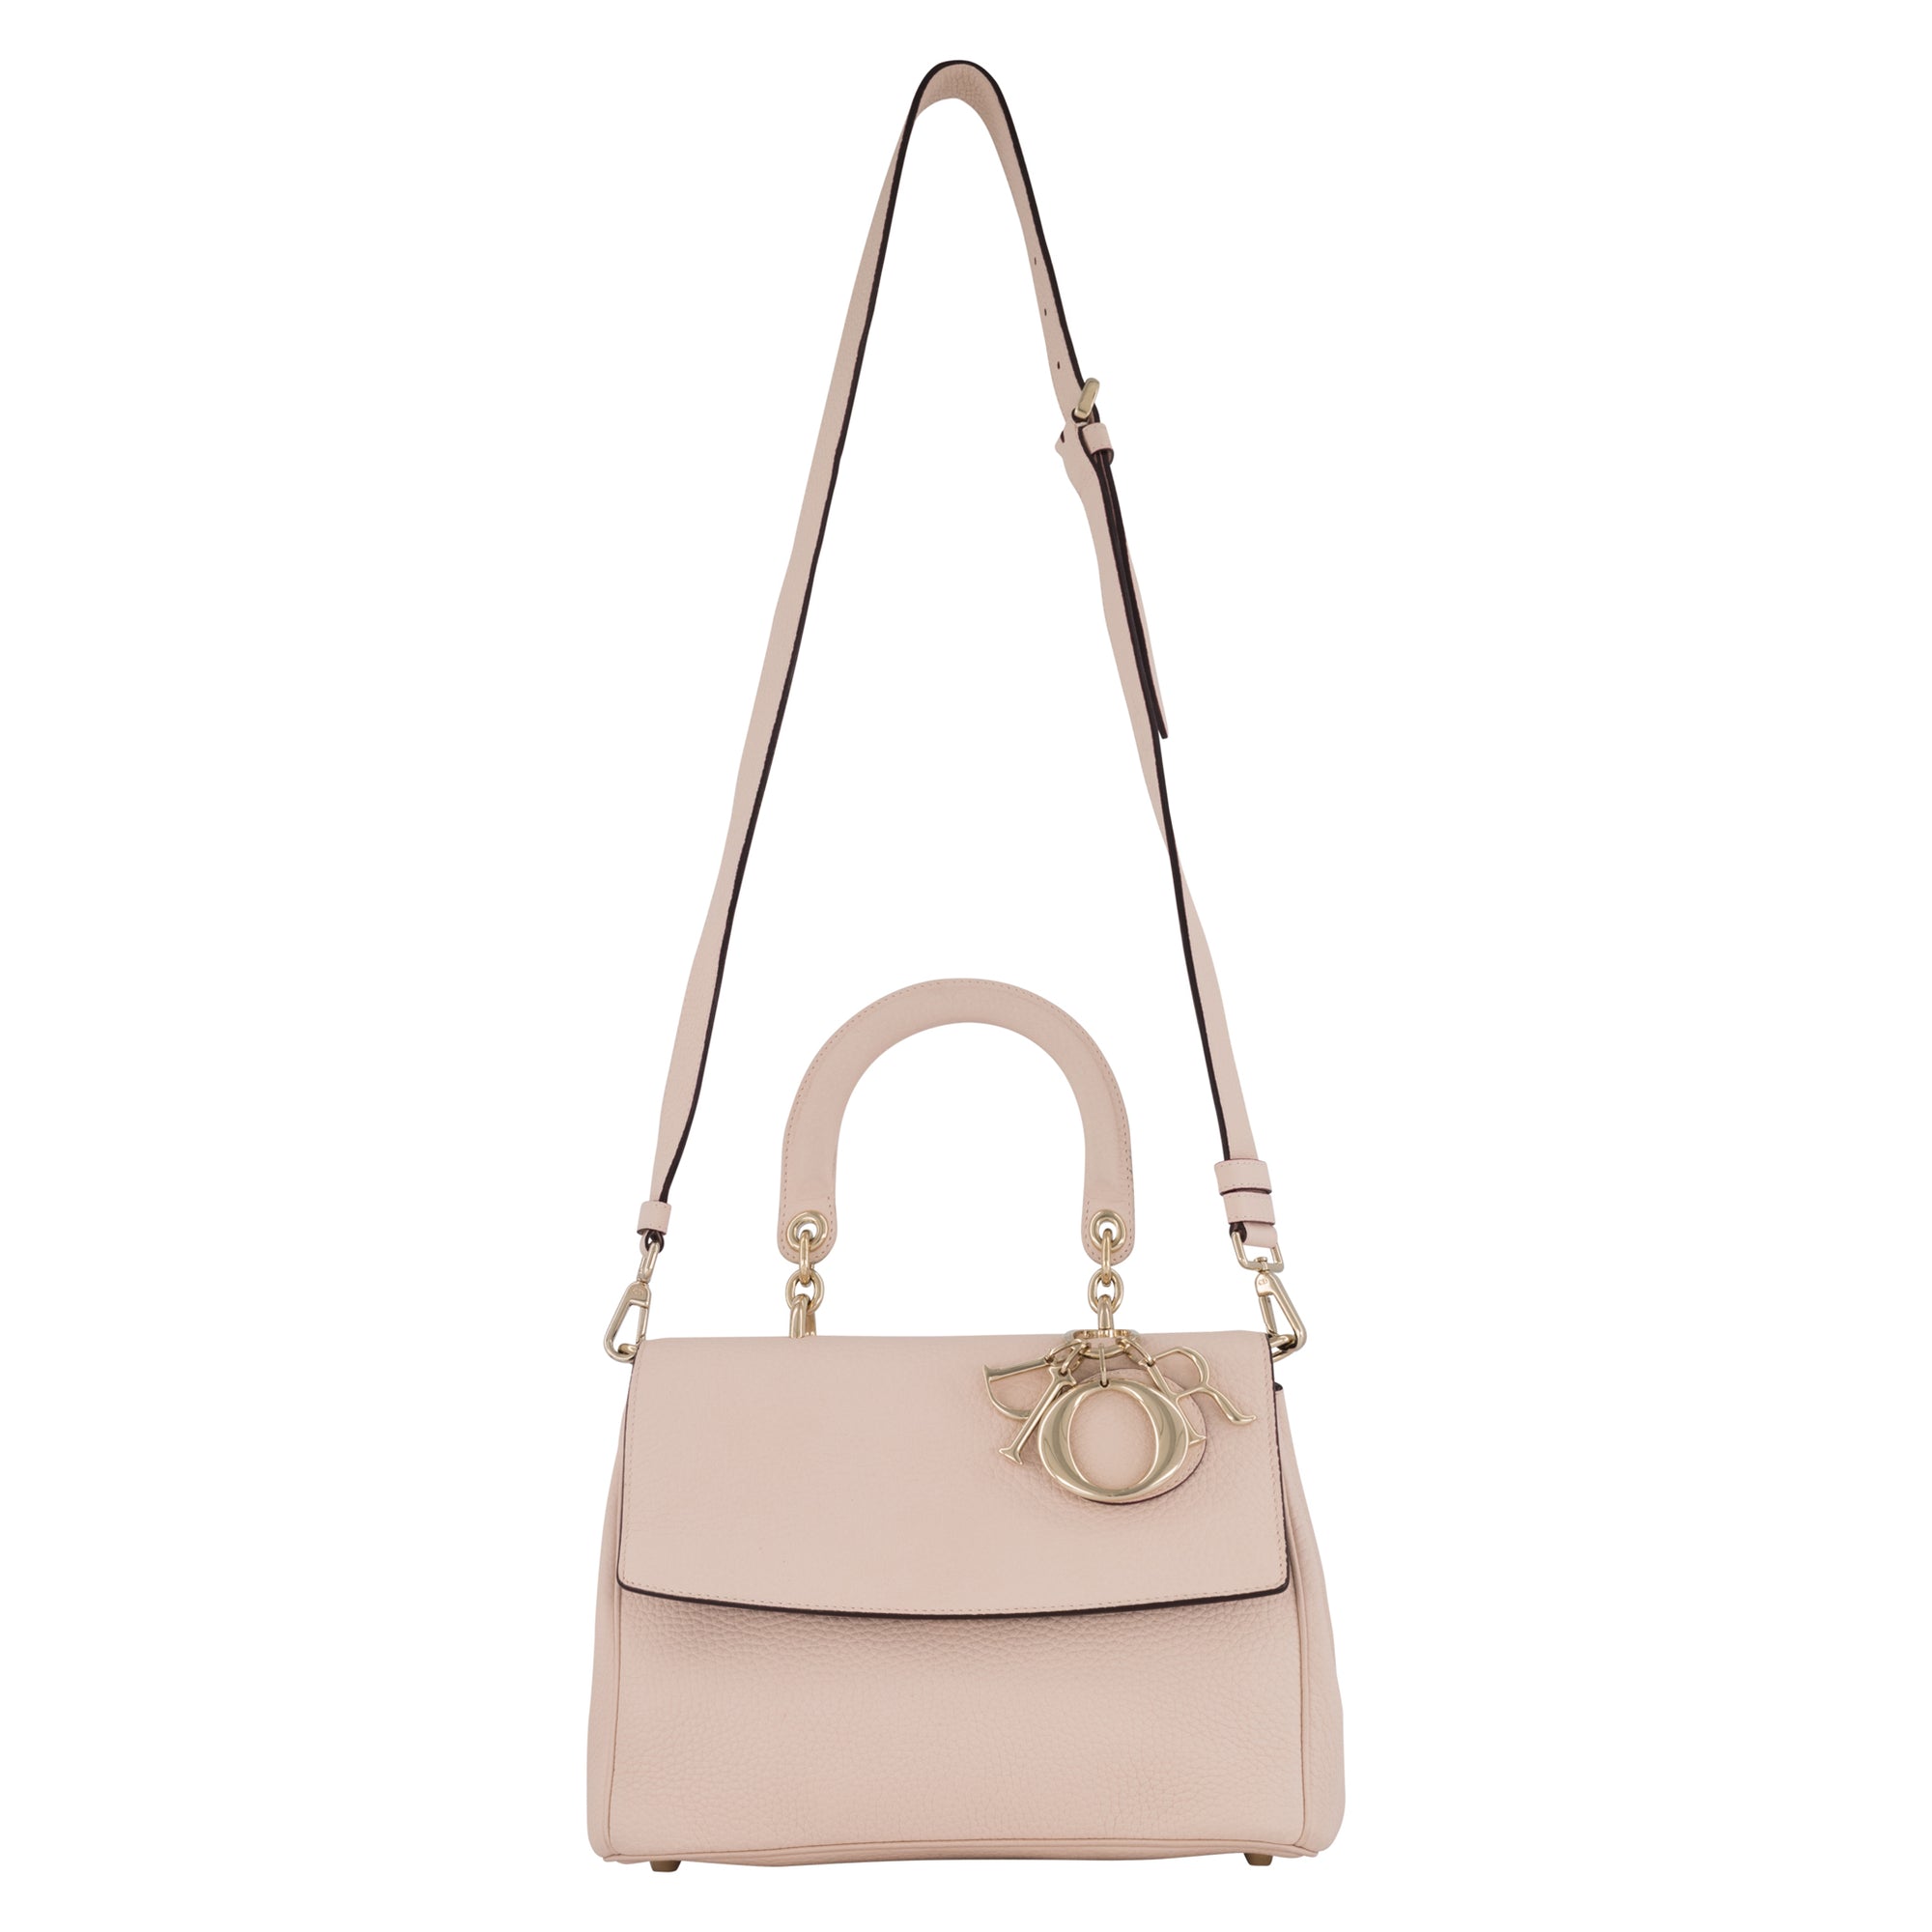 Dior Powder Pink Leather Mini Be Dior Top Handle Bag